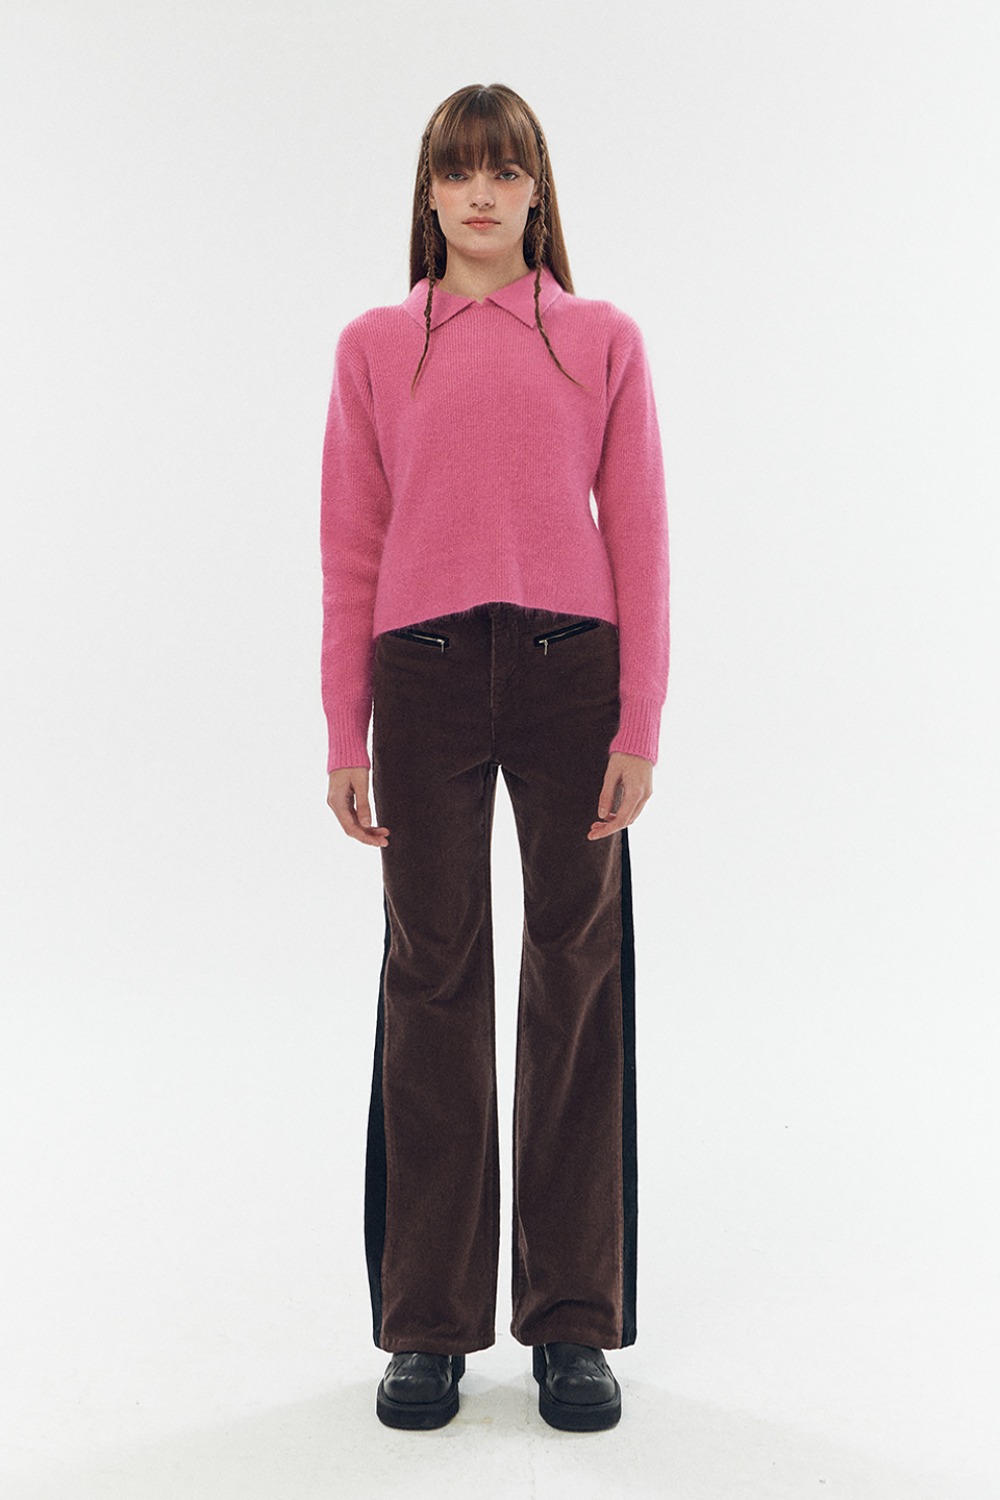 Angora mini collar knit [Pink]